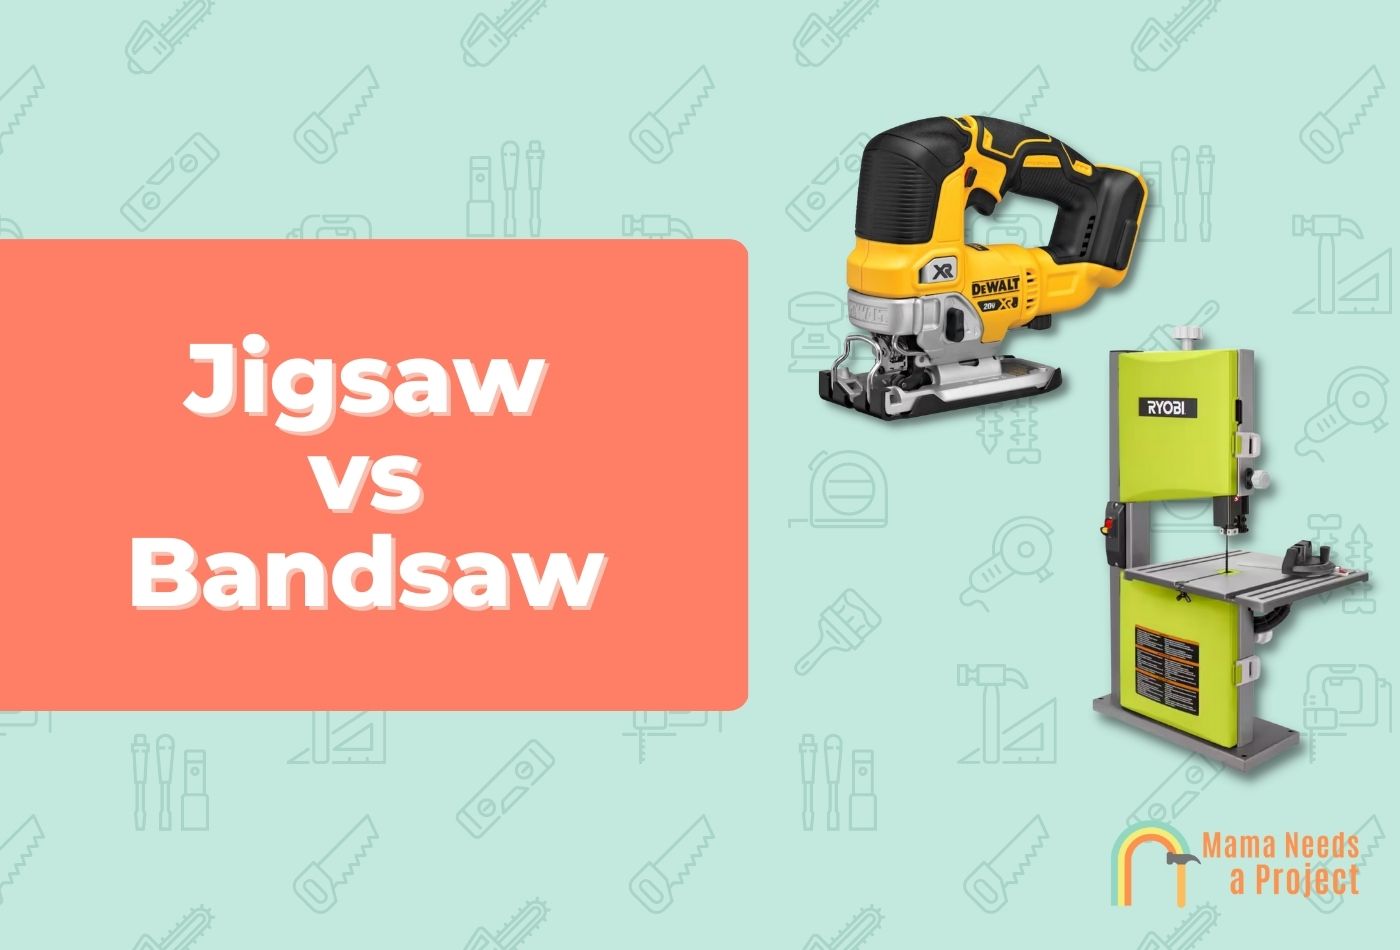 Jigsaw vs Bandsaw